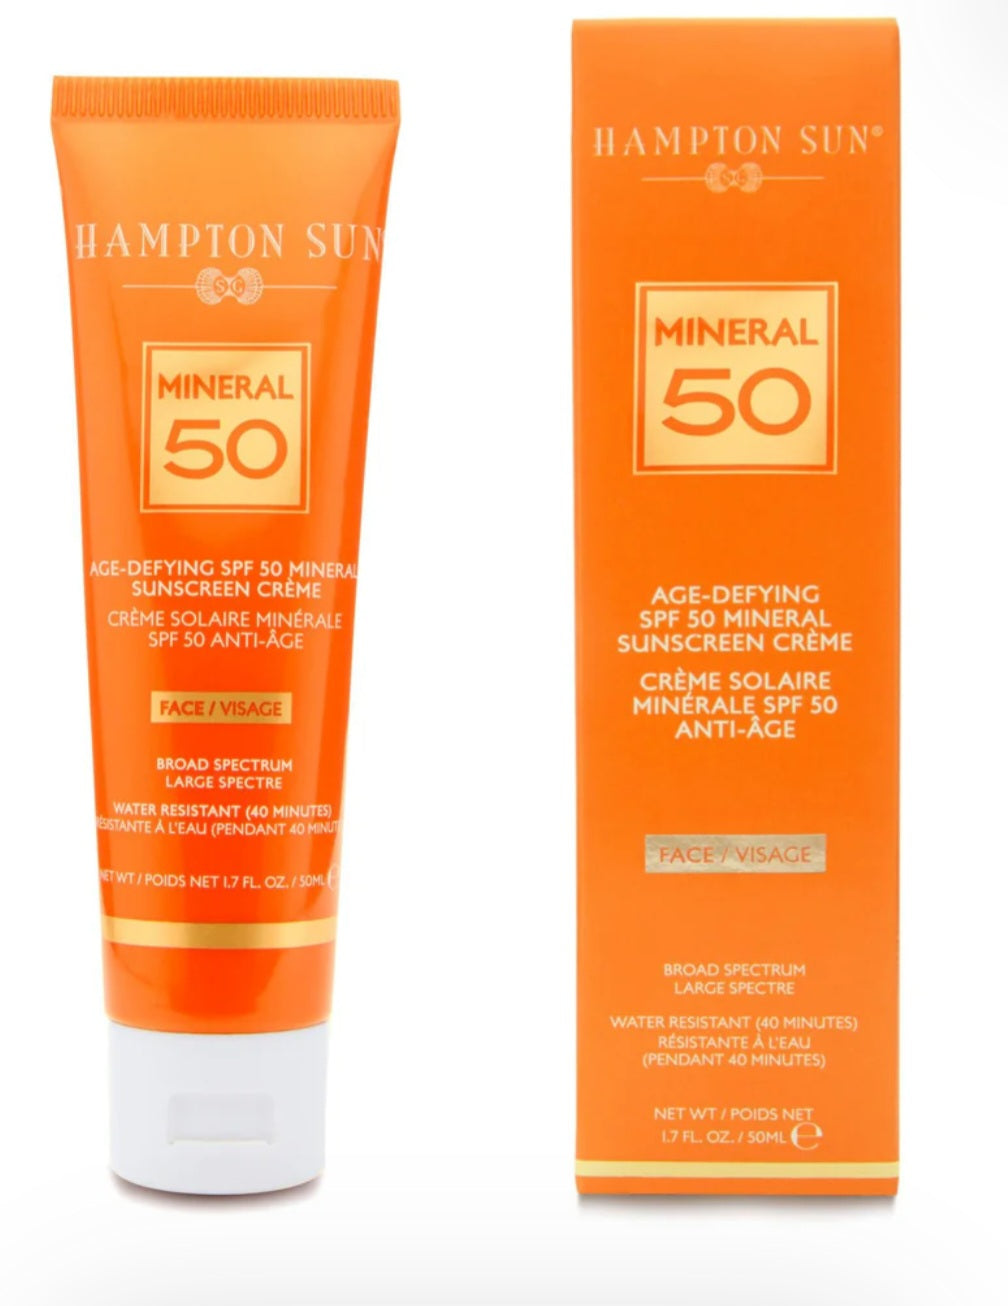 HAMPTON SUN
Age-Defying SPF 50 Mineral Crème for Face